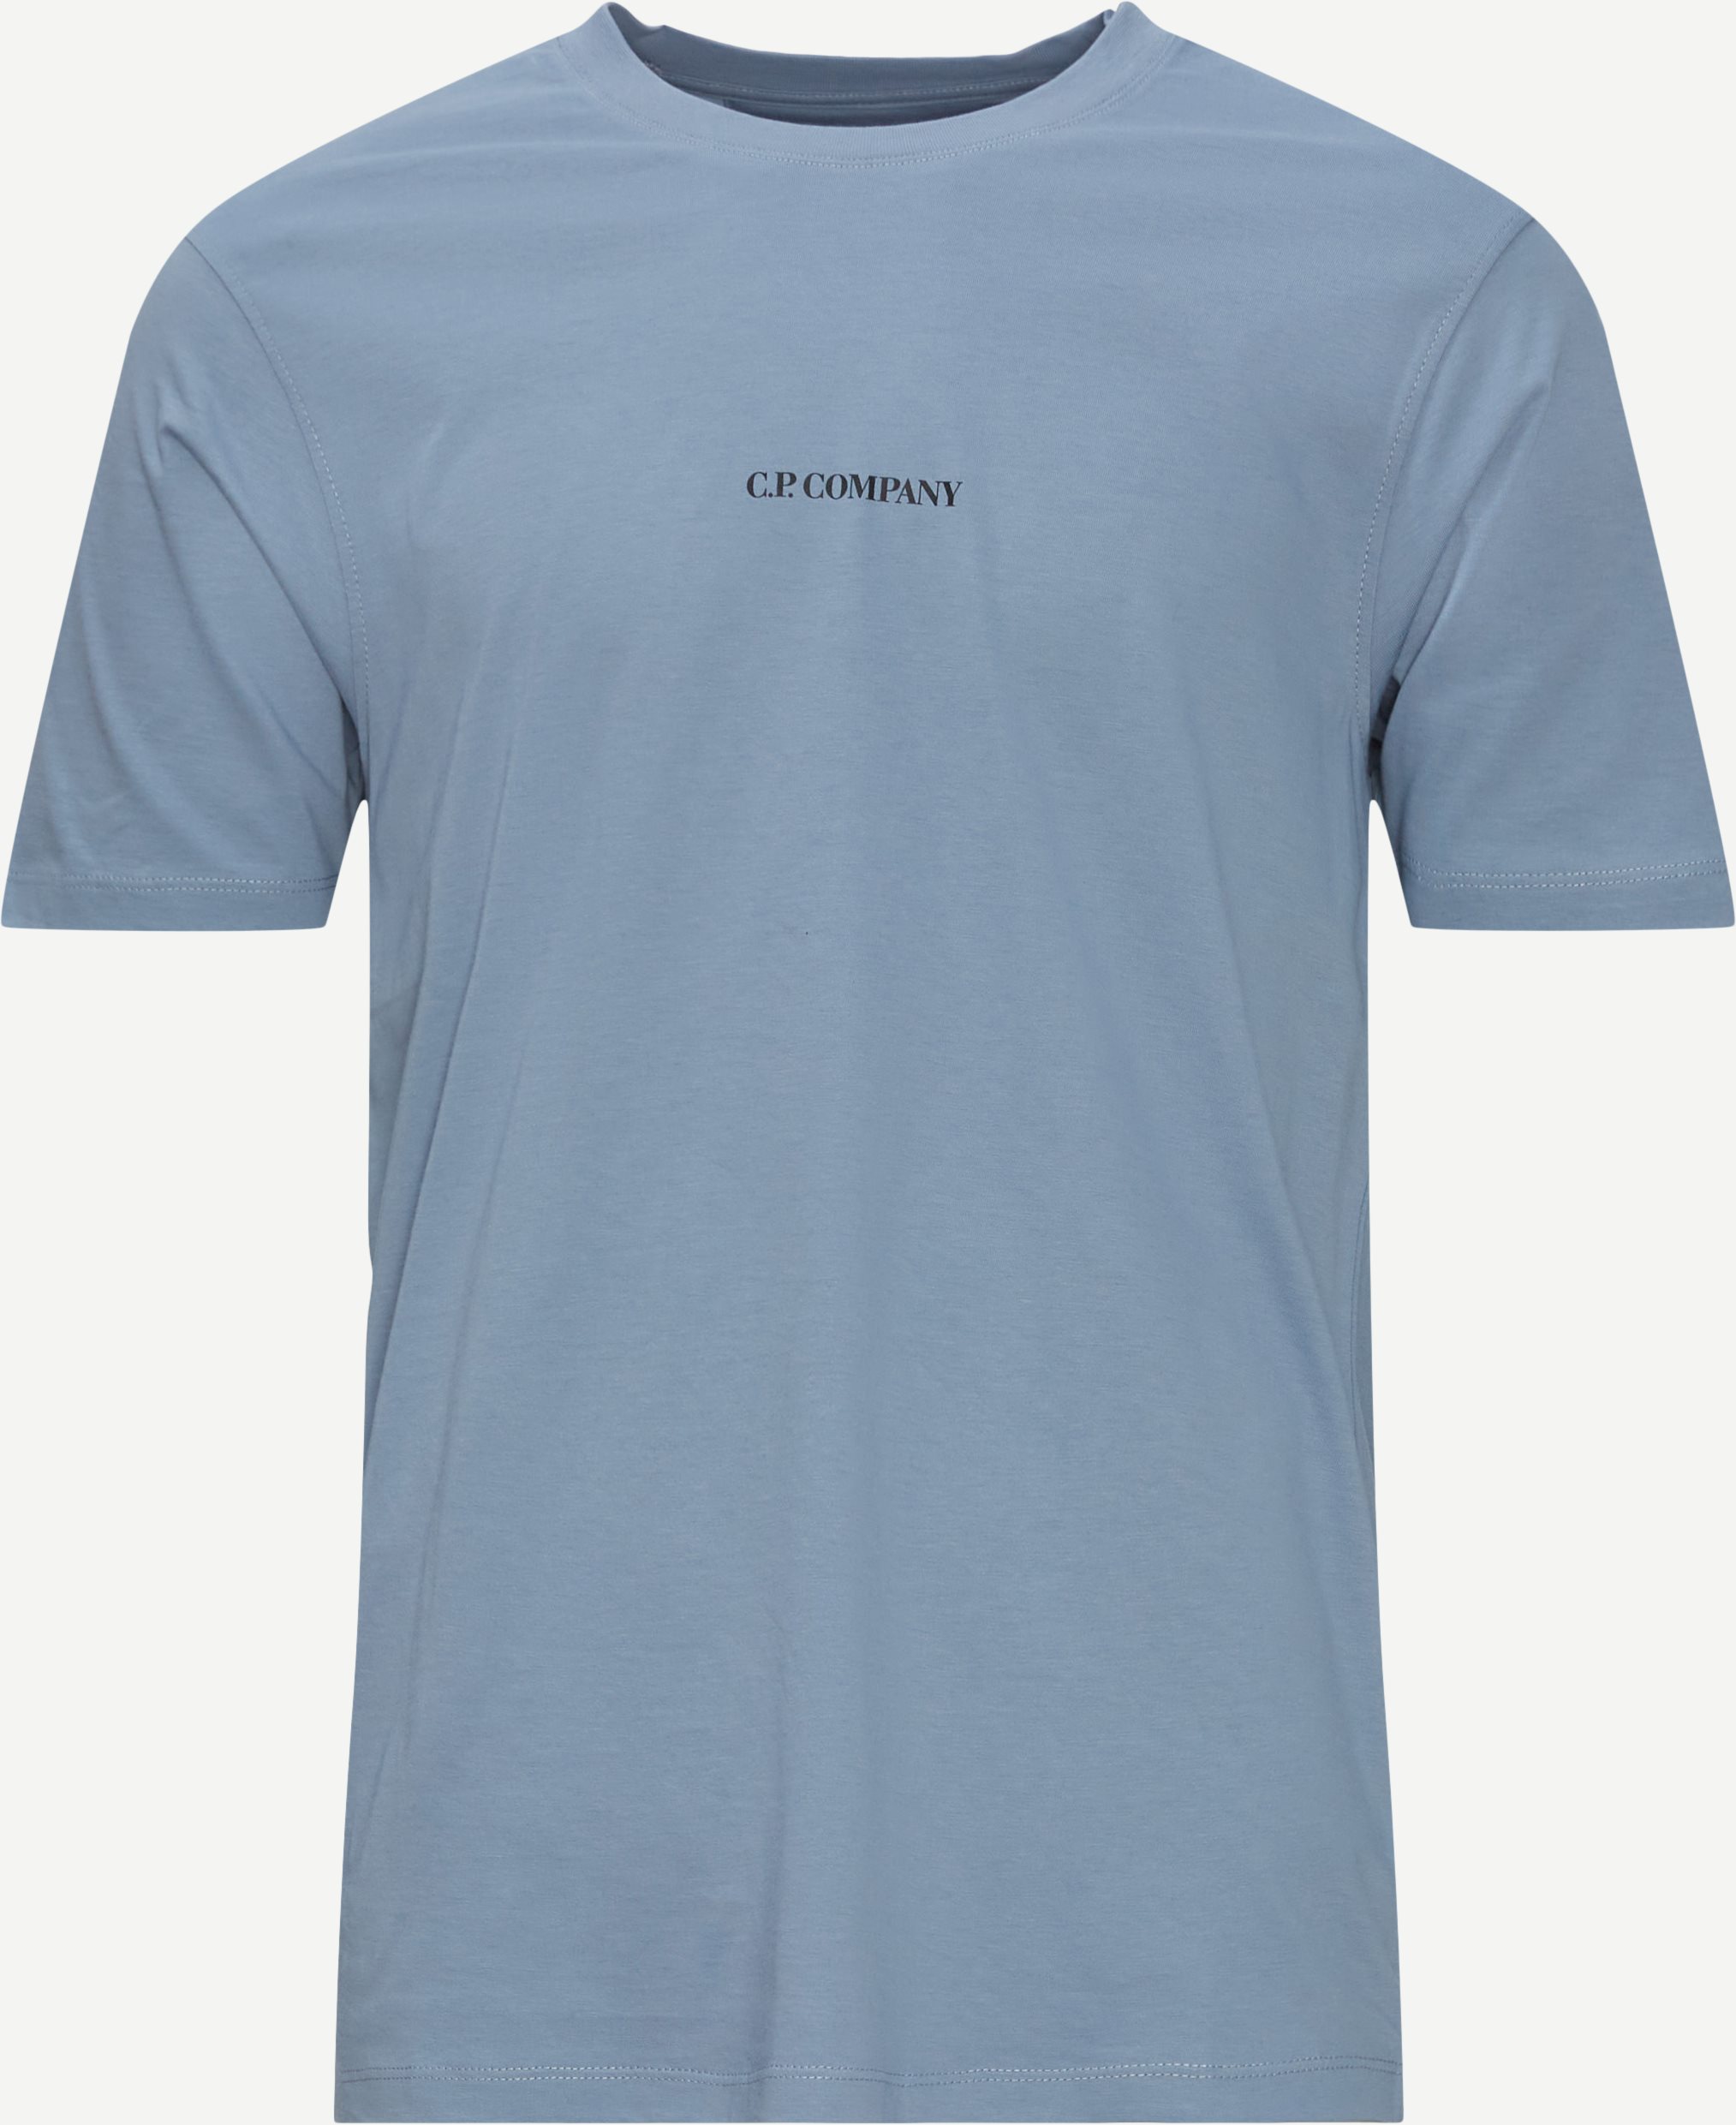 Jersey Tee - T-shirts - Relaxed fit - Blå